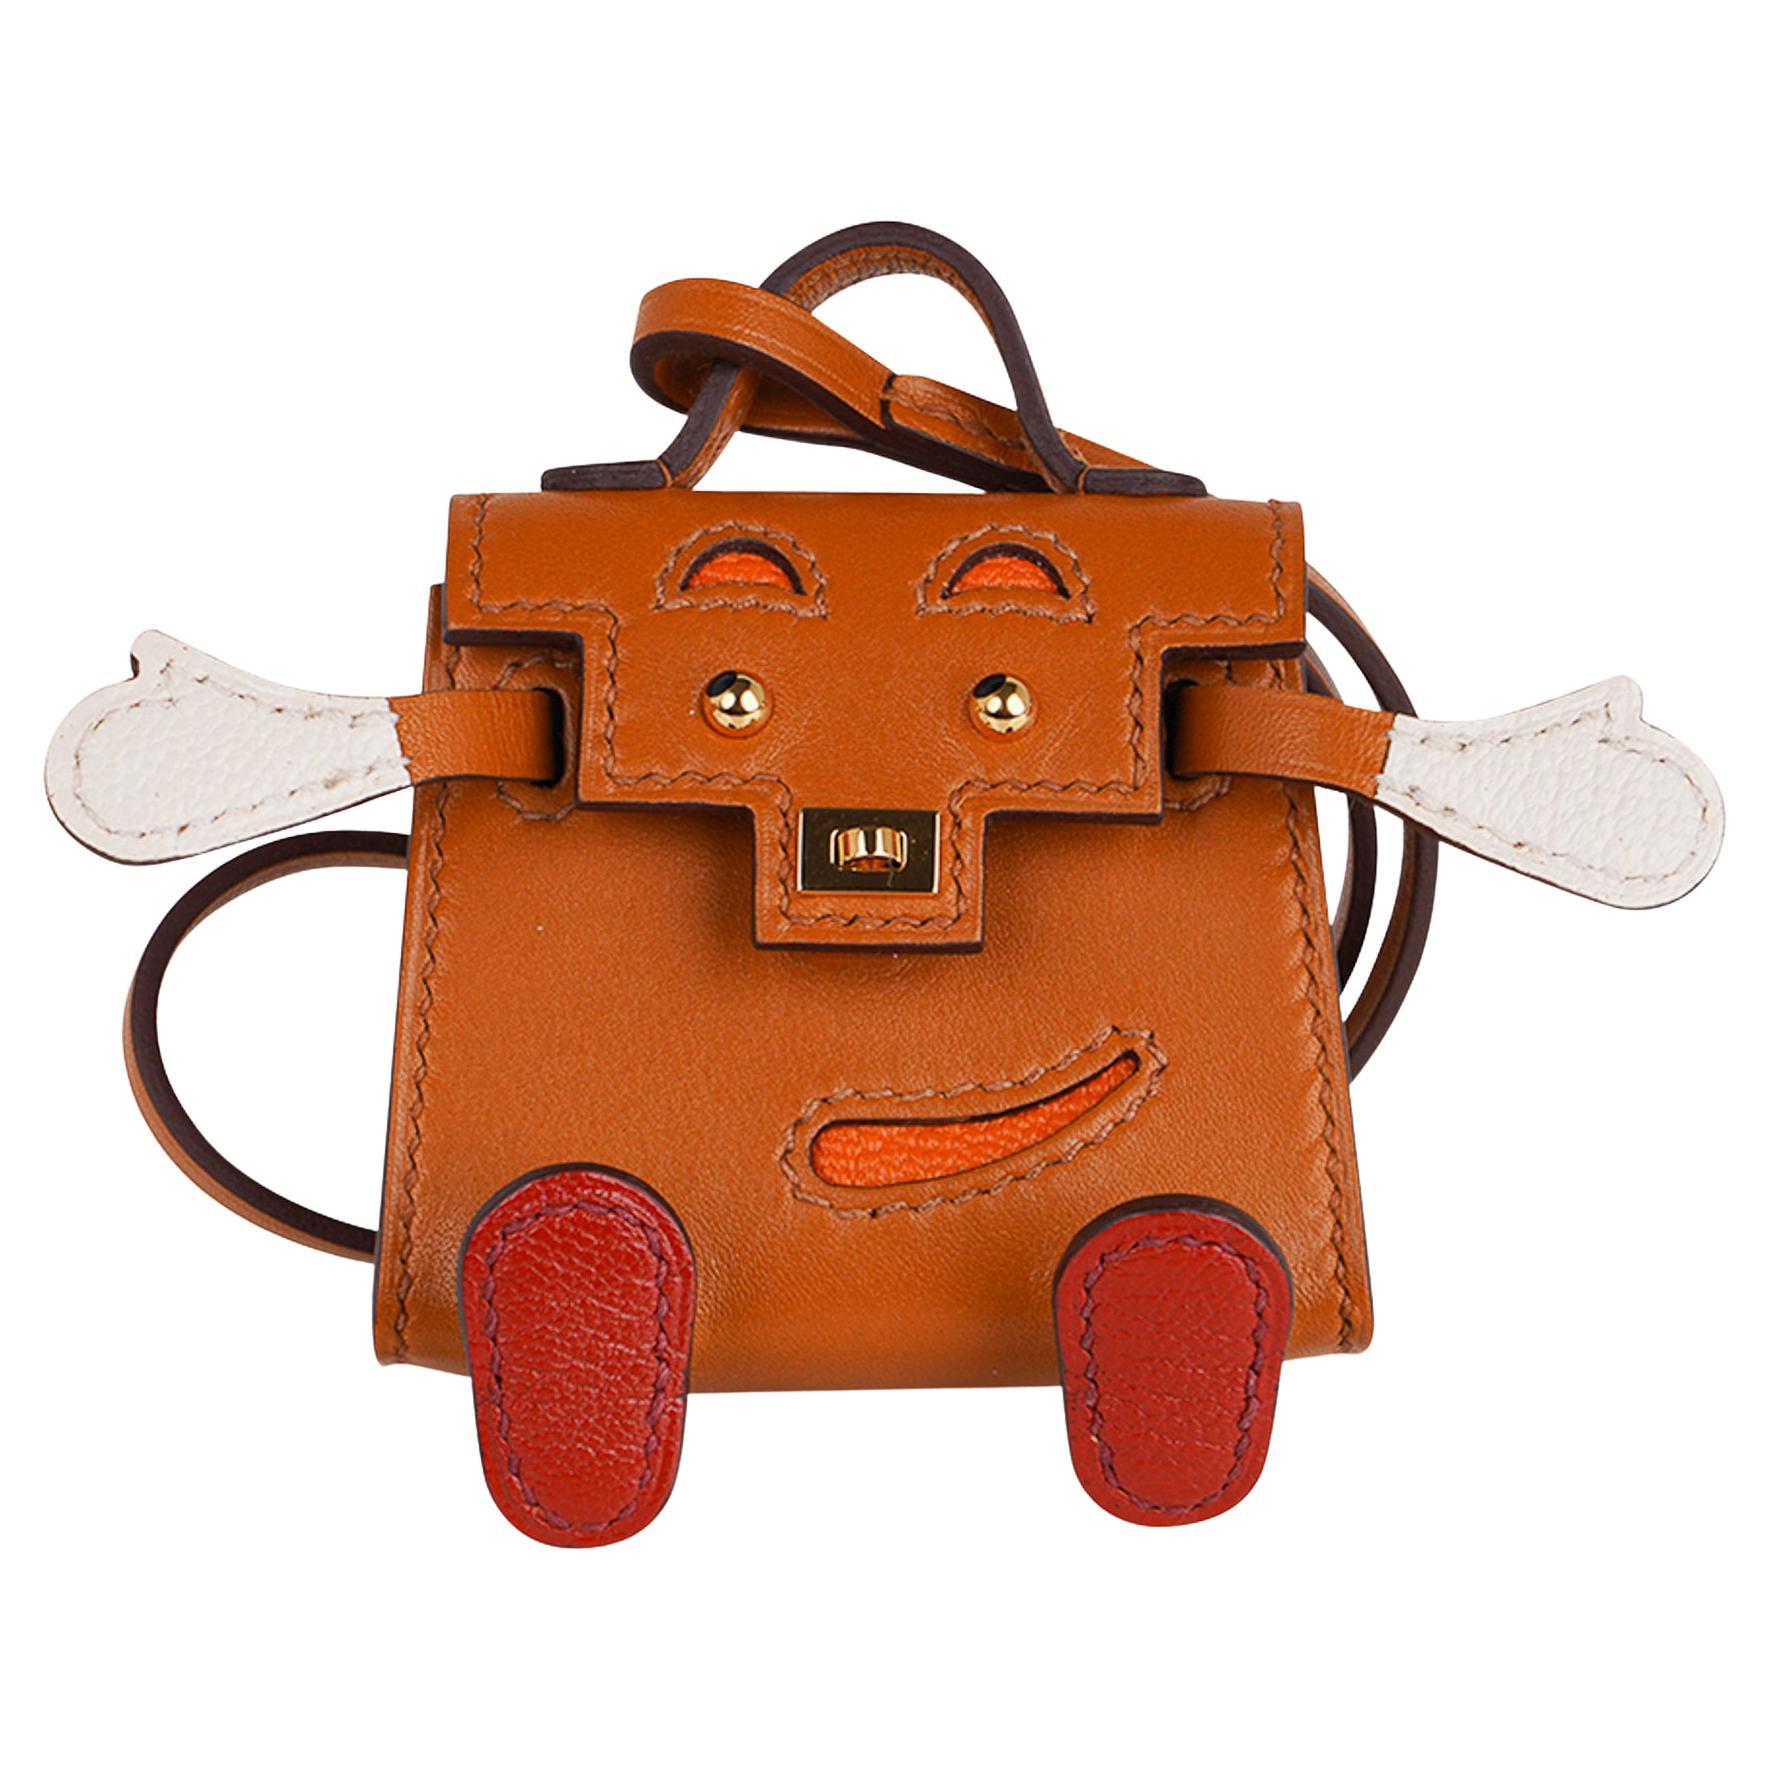 New]Hermes Kelly Twilly Bag Charm Fauve Palladium Tadelakt Leather